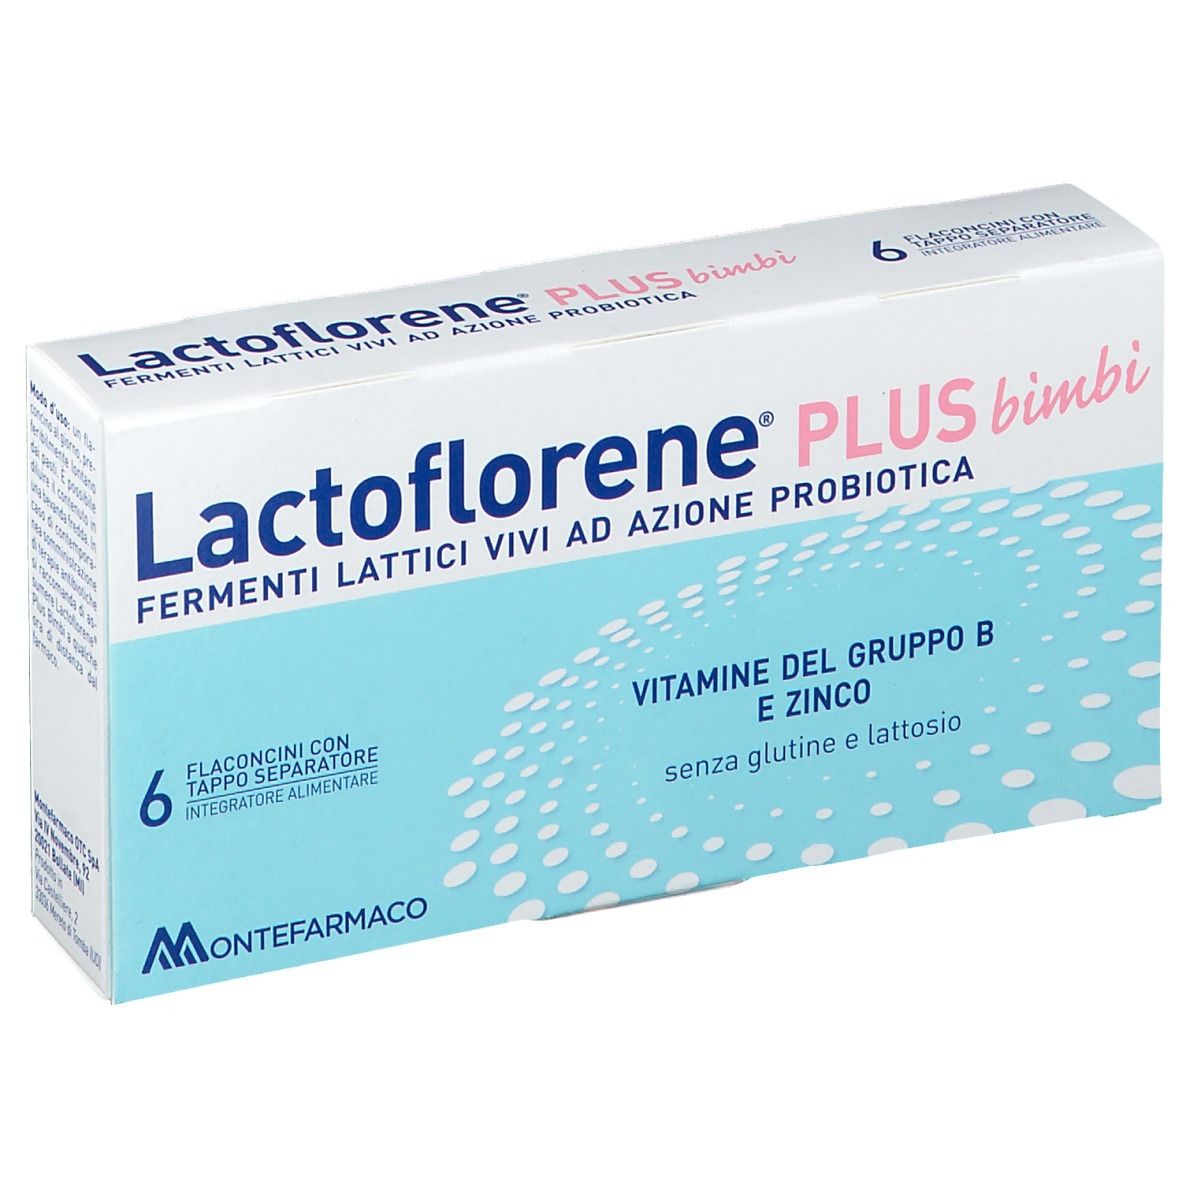 Lactoflorene® Plus Bimbi